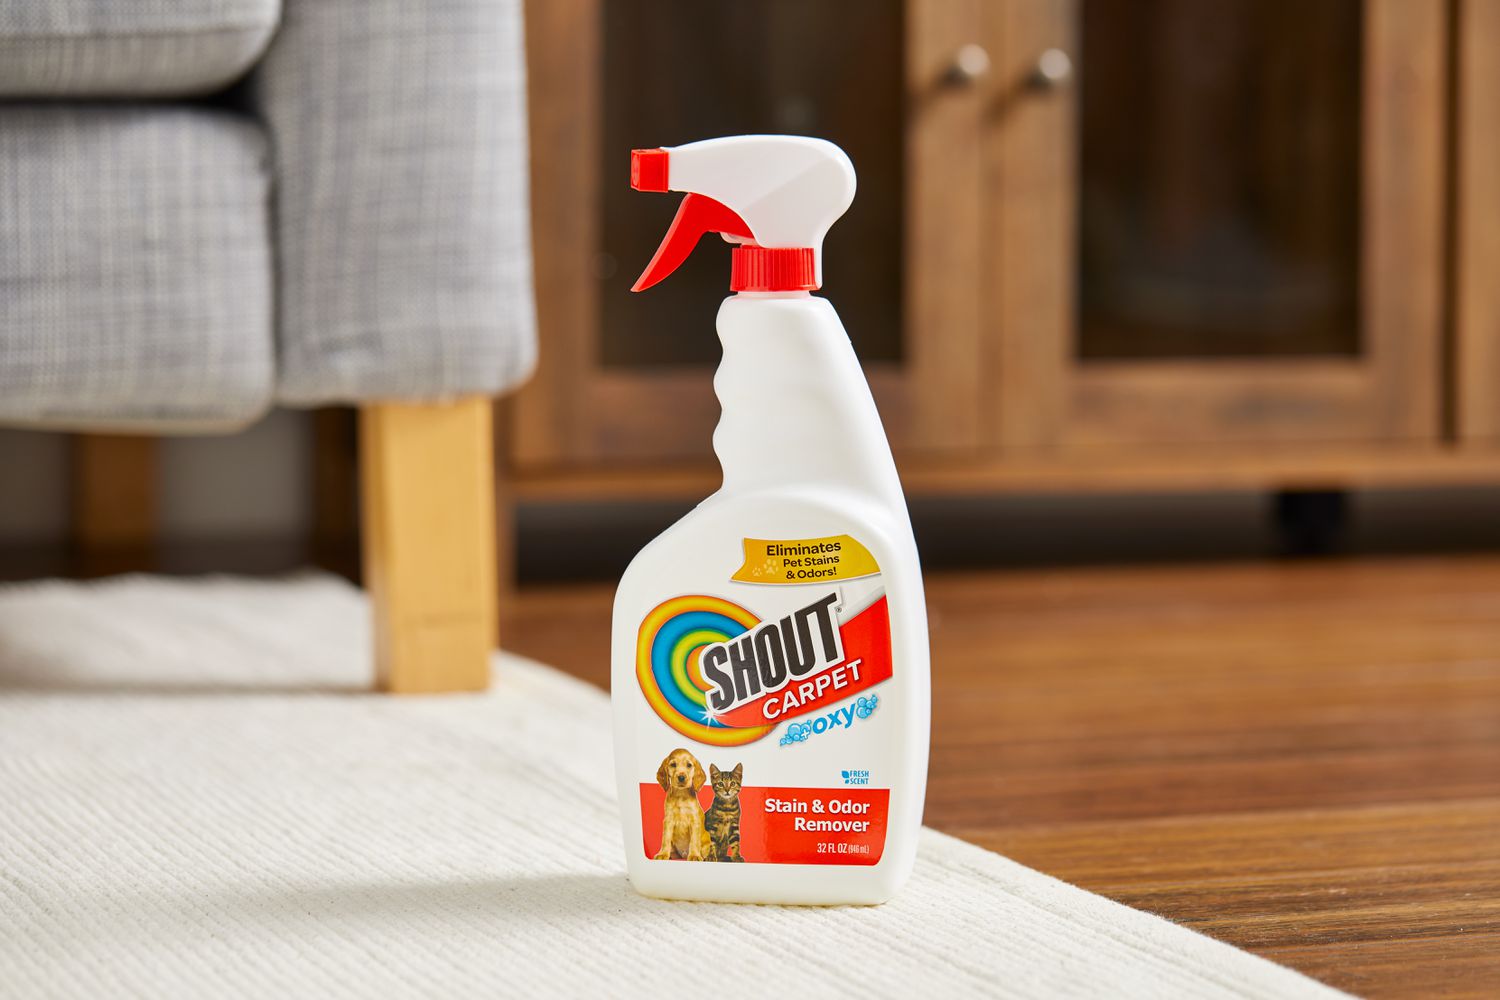 Resolve Pet Expert Easy Clean Carpet Cleaner Gadget + Foam Spray